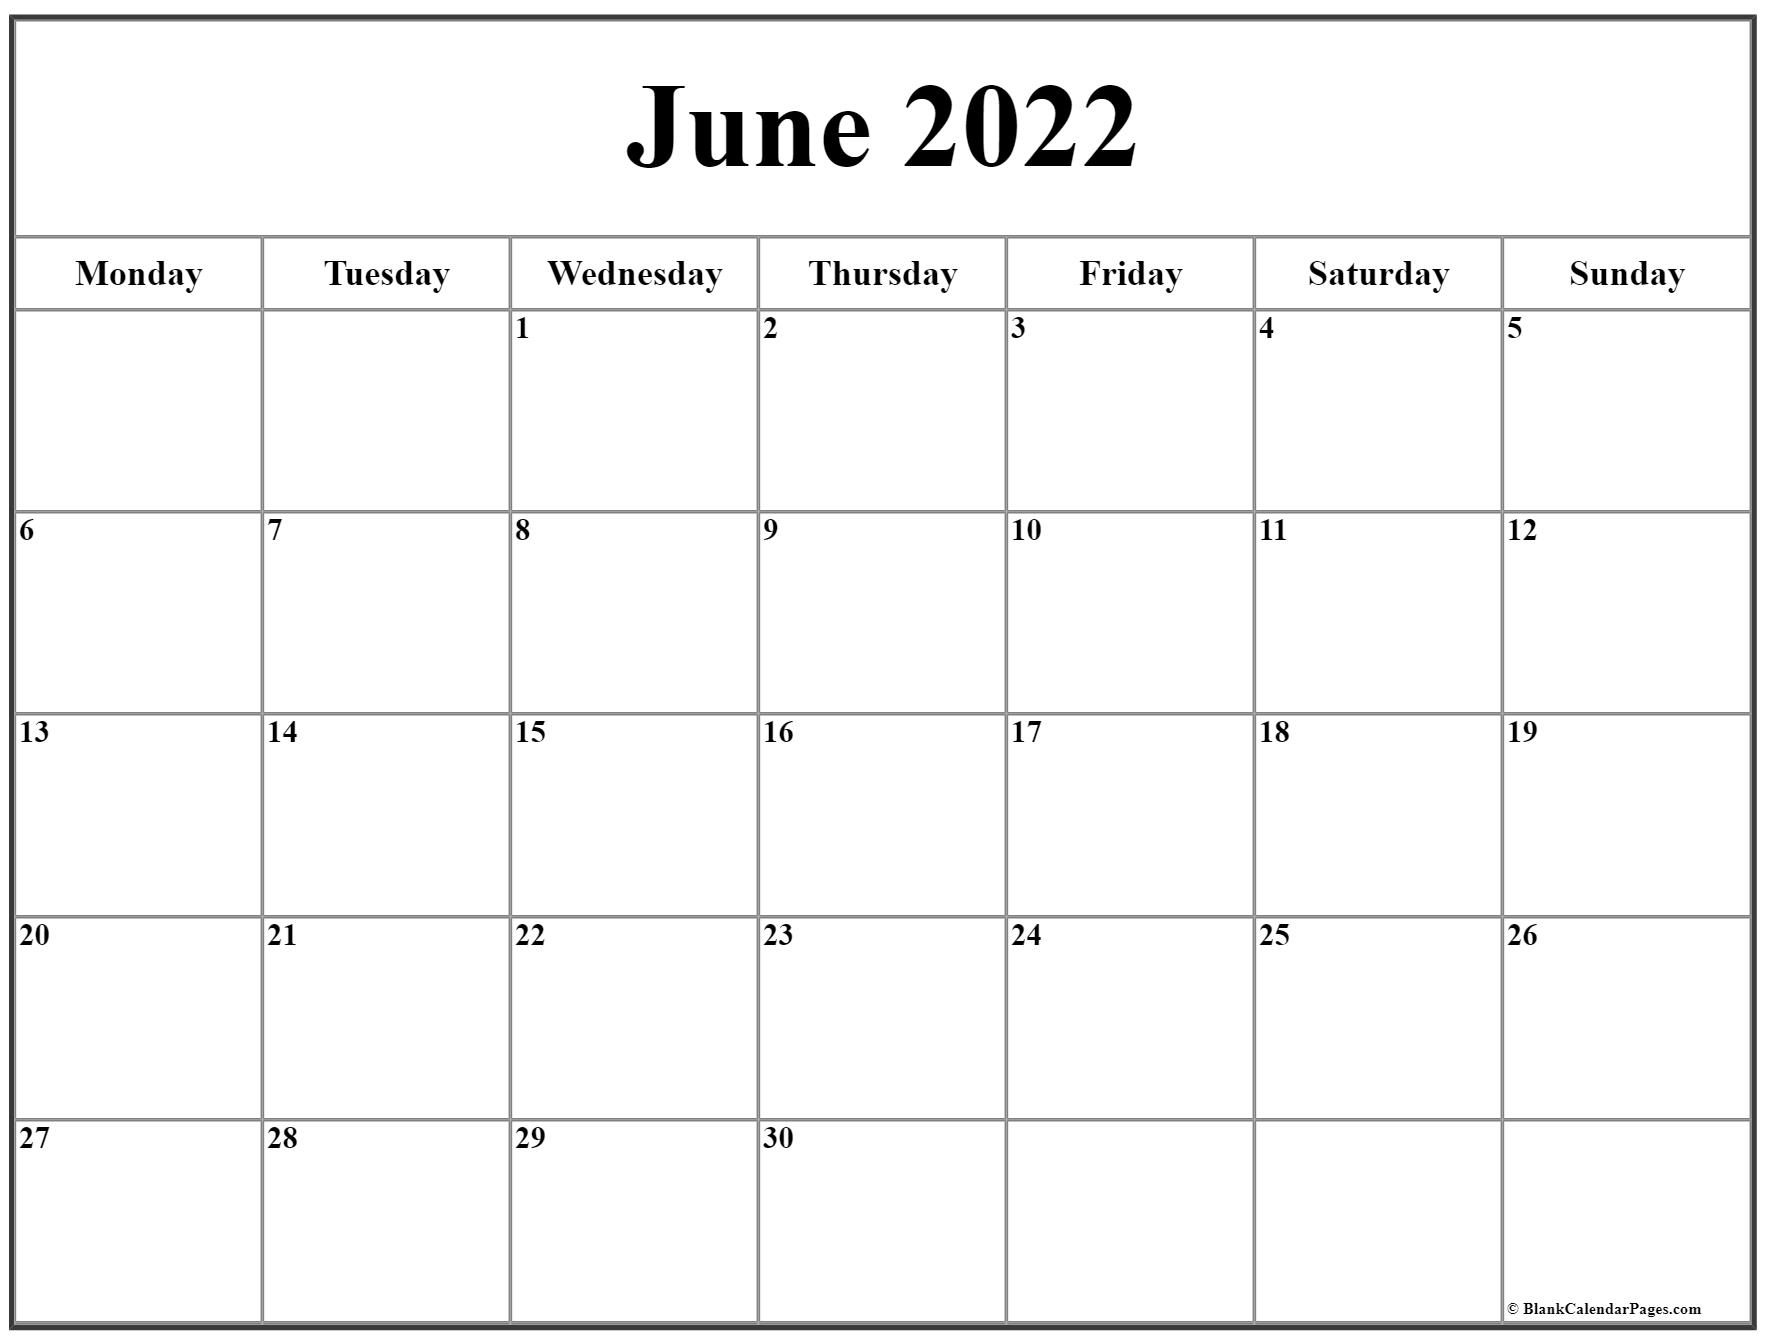 Monday To Sunday Planner | Ten Free Printable Calendar